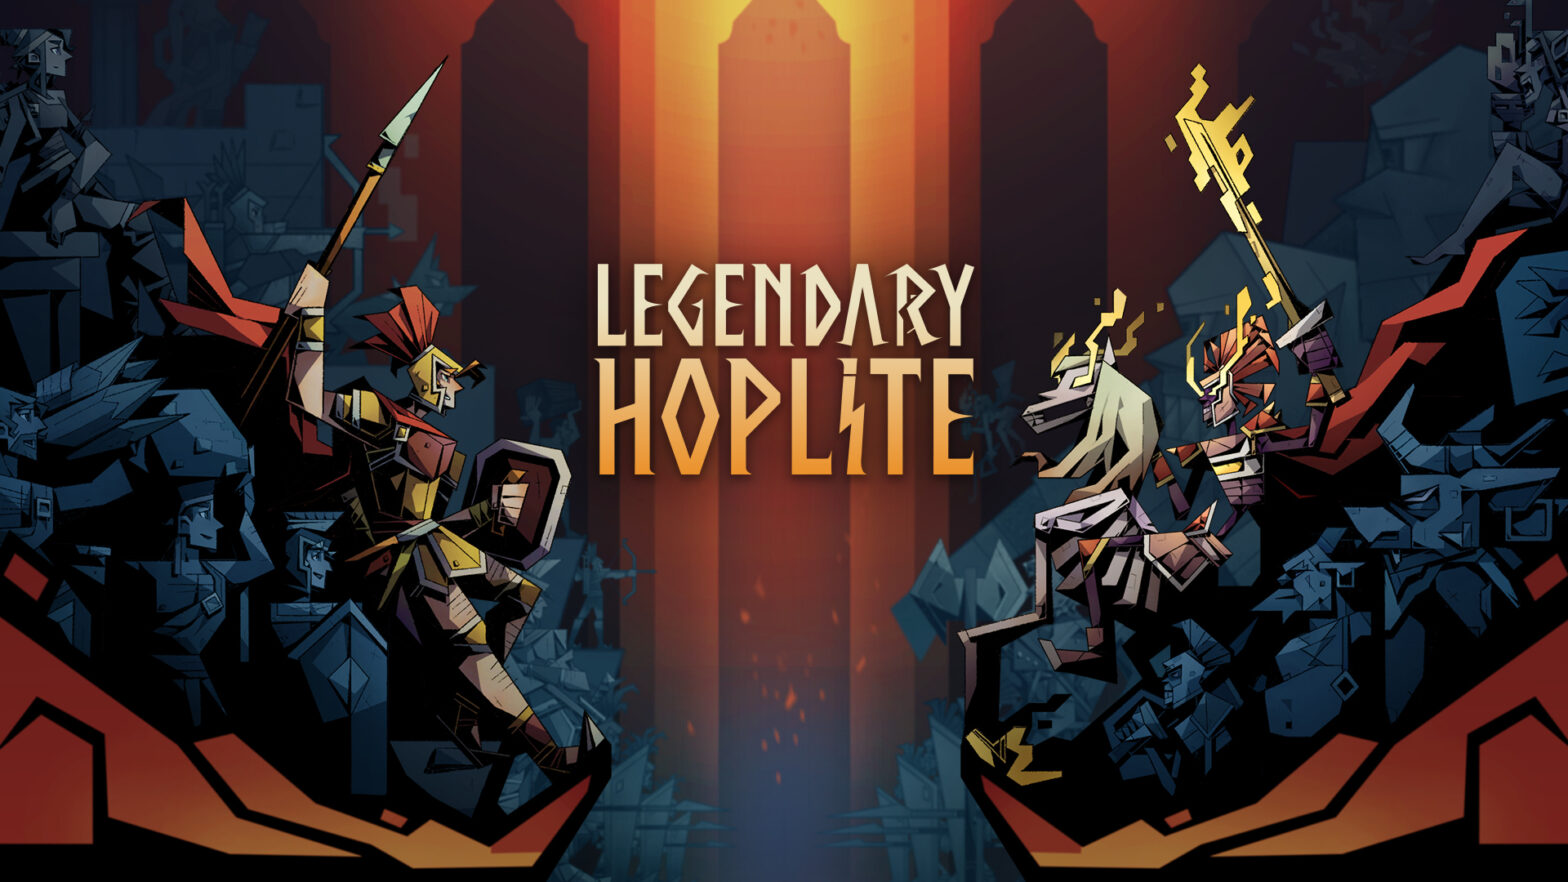 Legendary Hoplite feature image